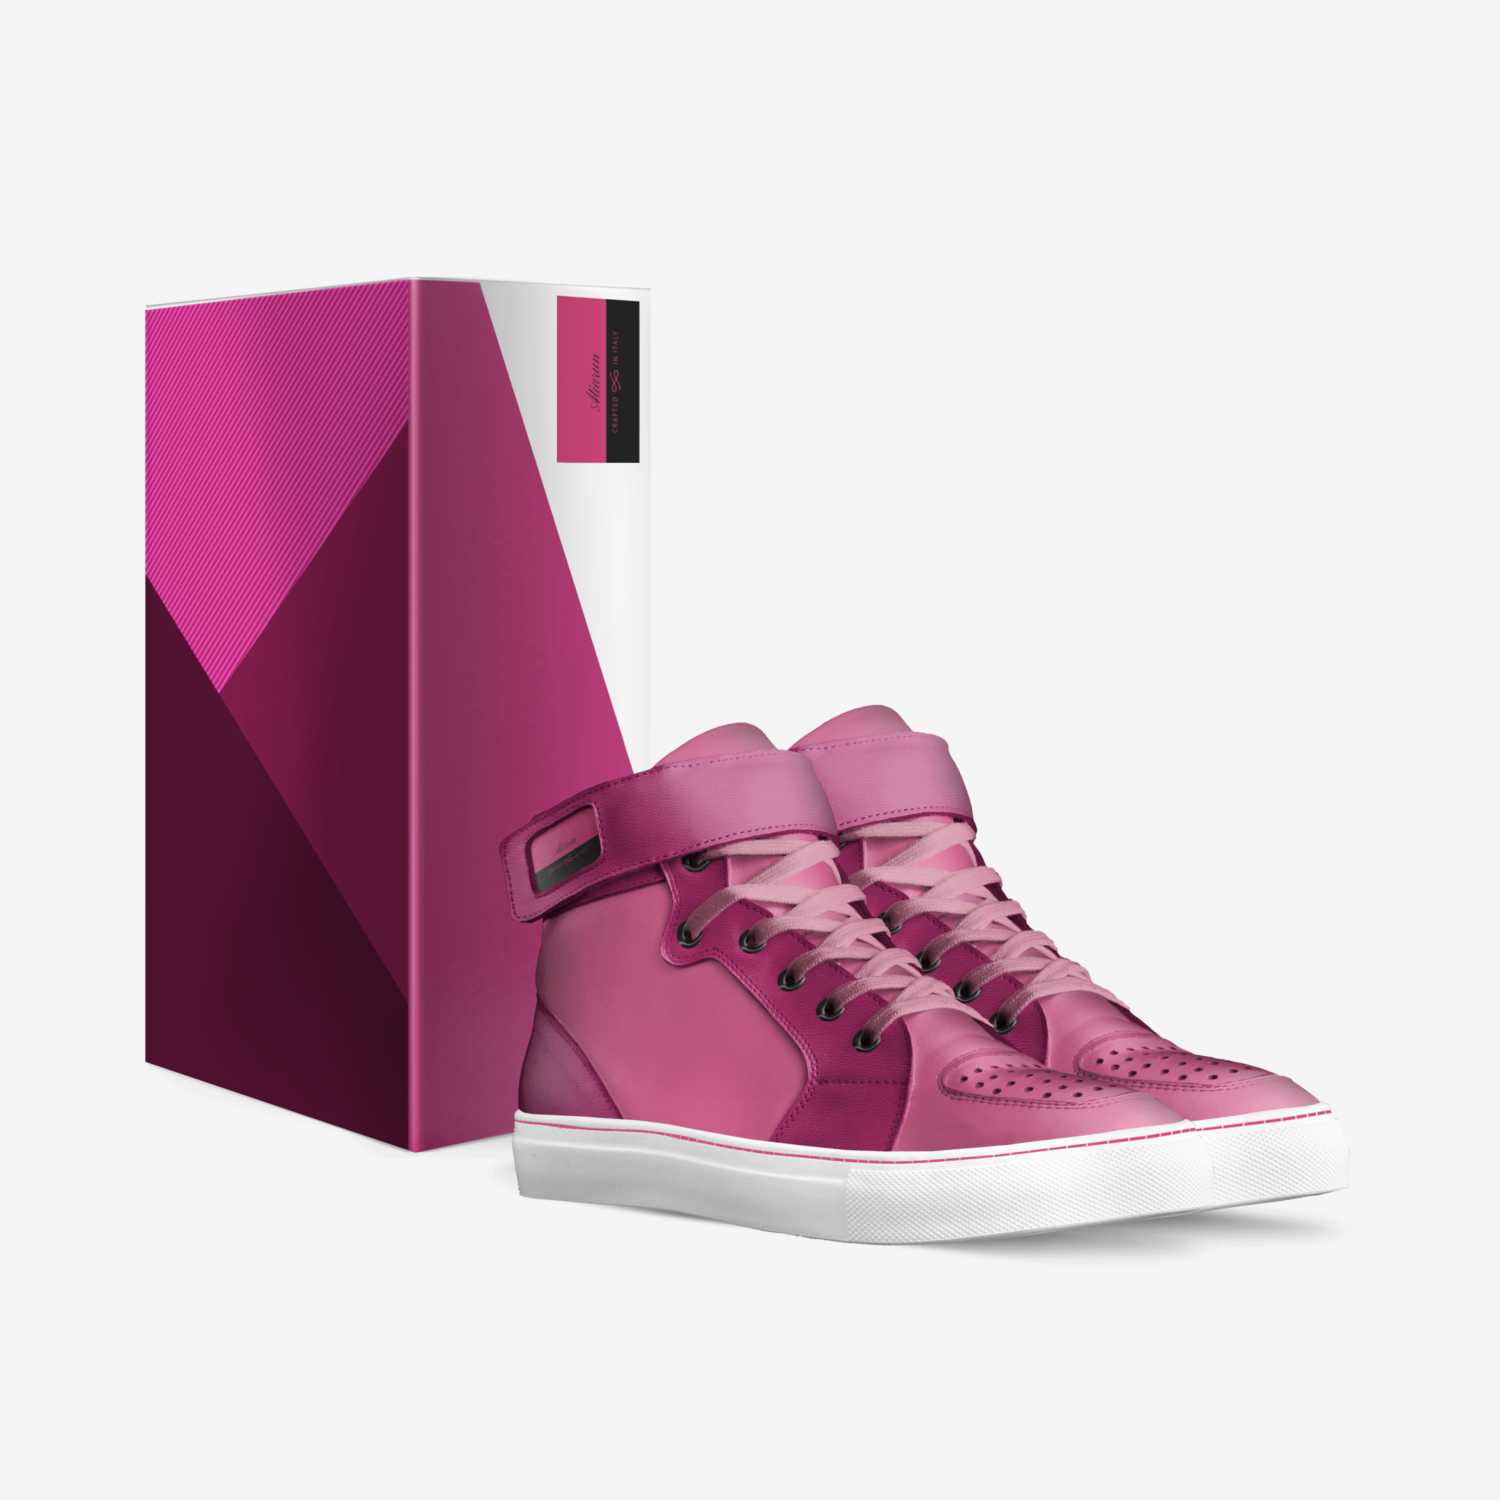 Atiarun custom made in Italy shoes by Natasha M Jones | Box view